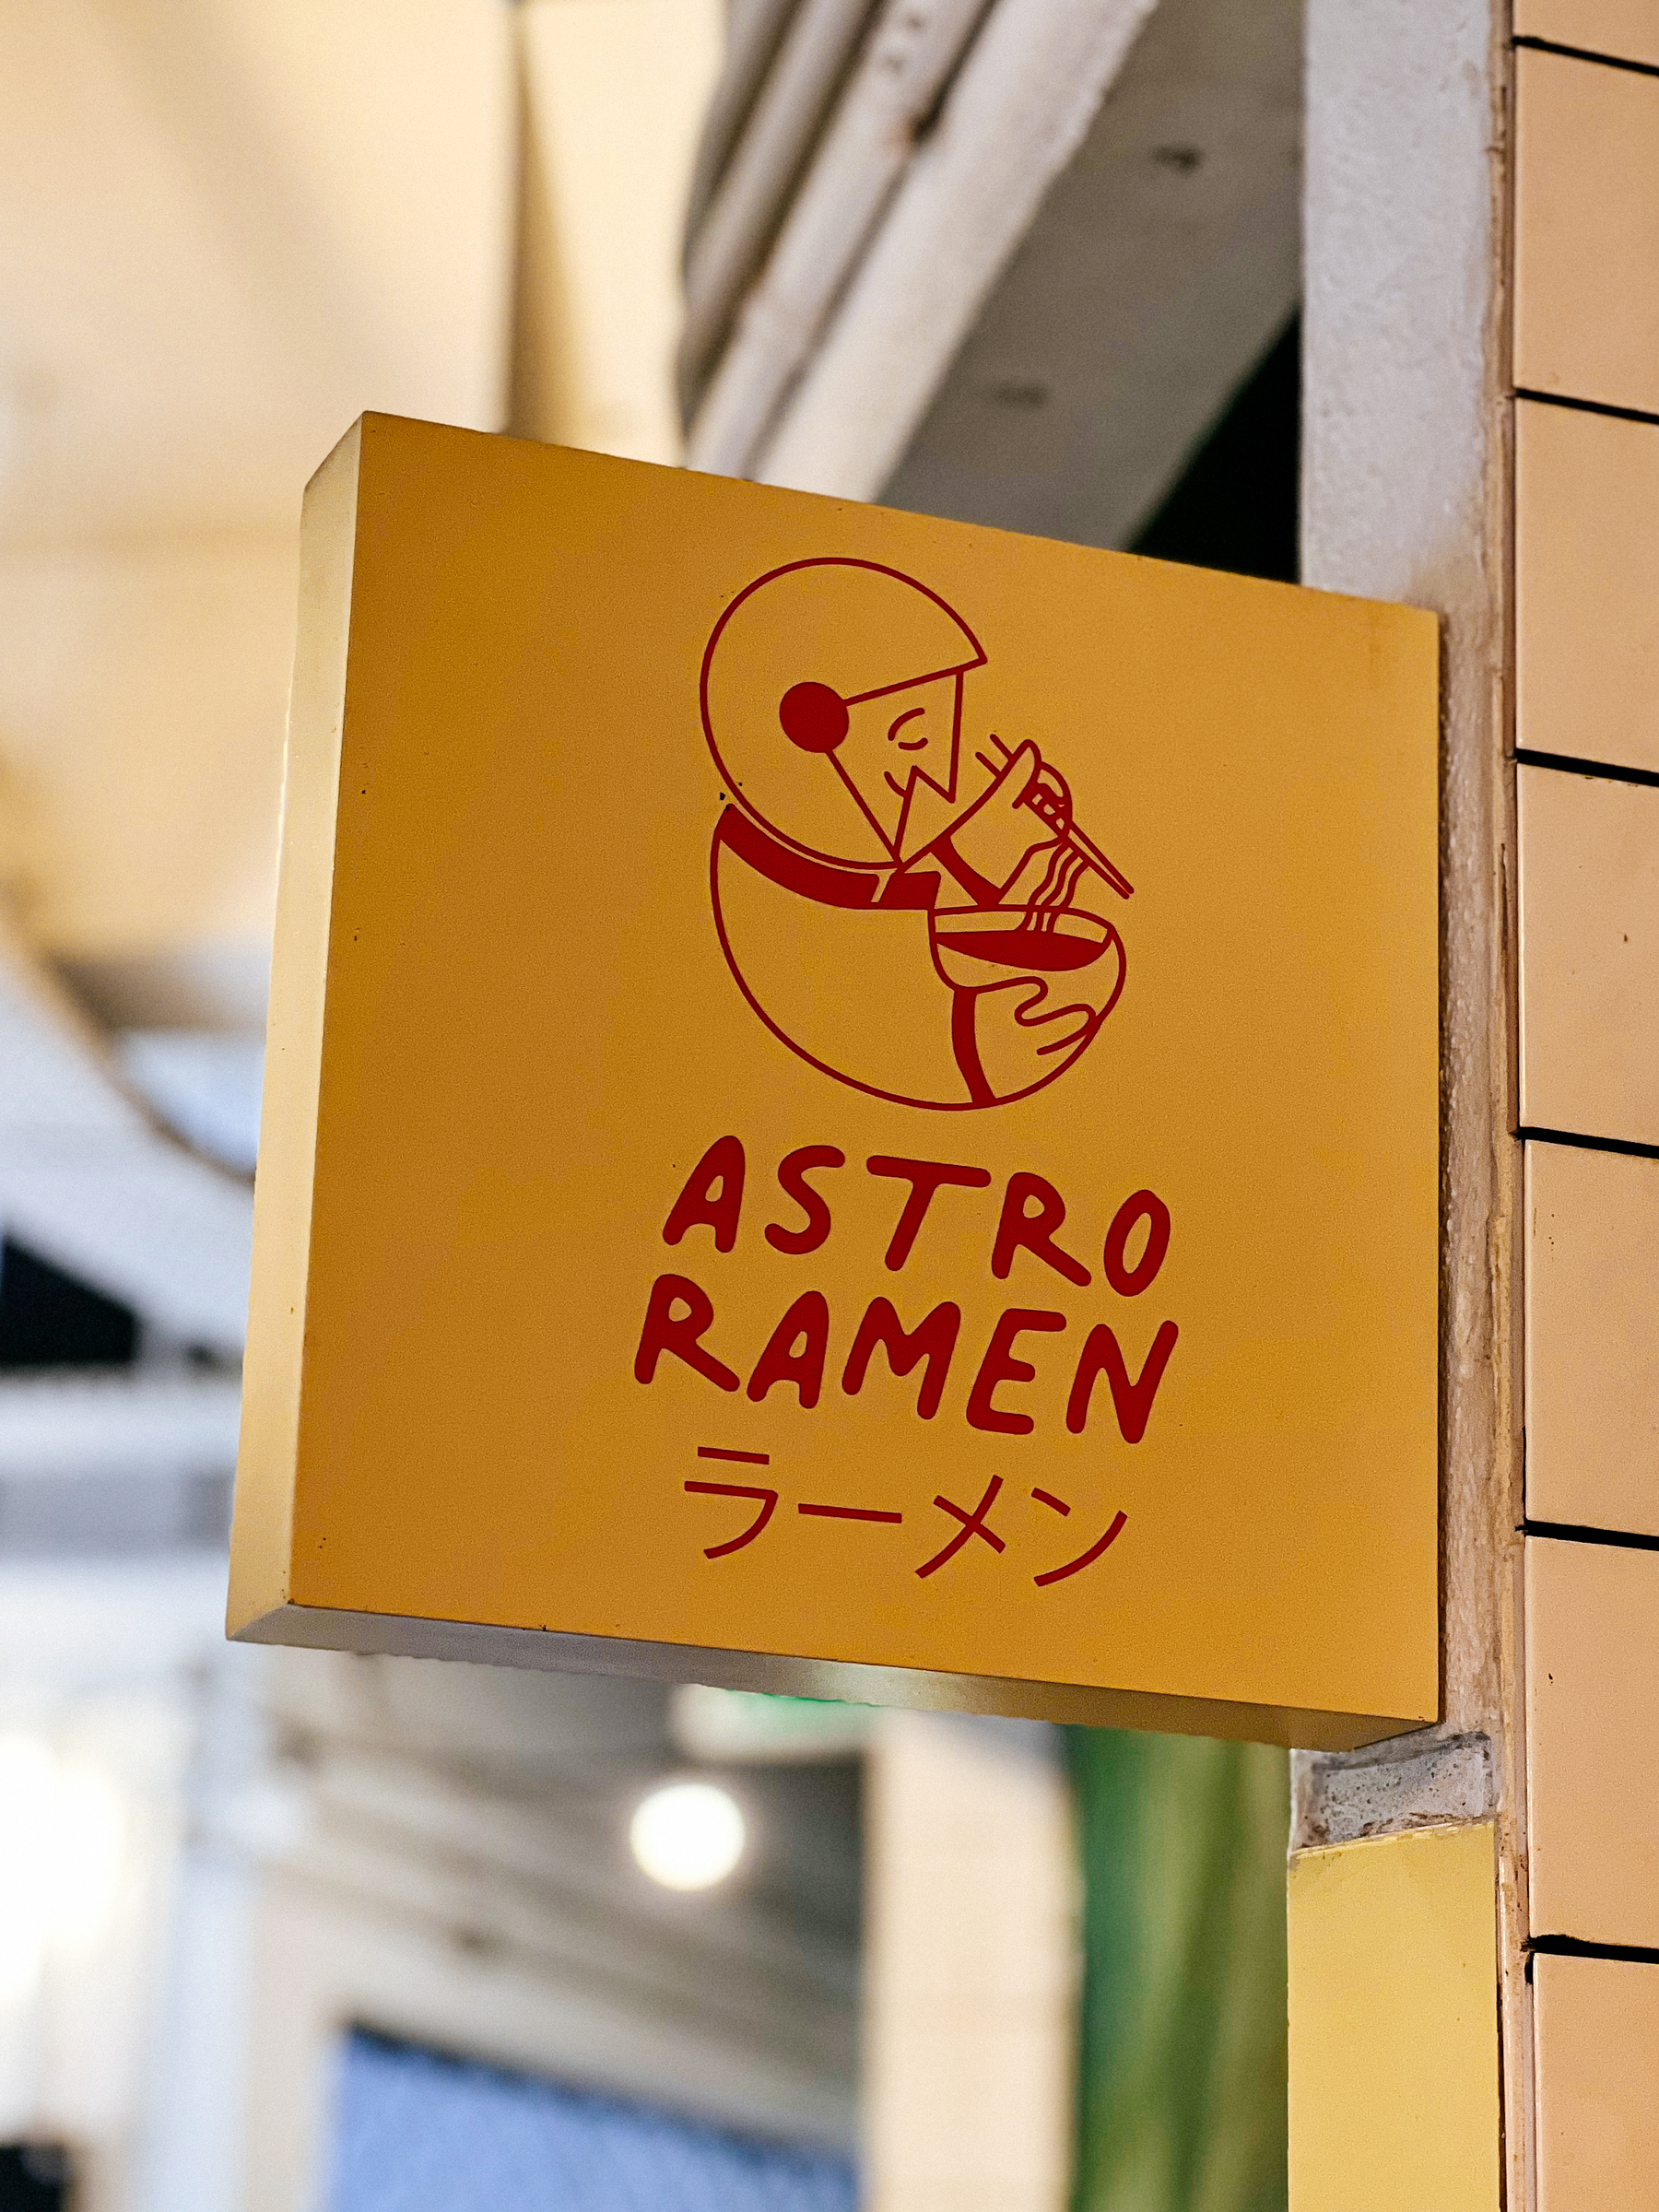 “Astro Ramen” sign.